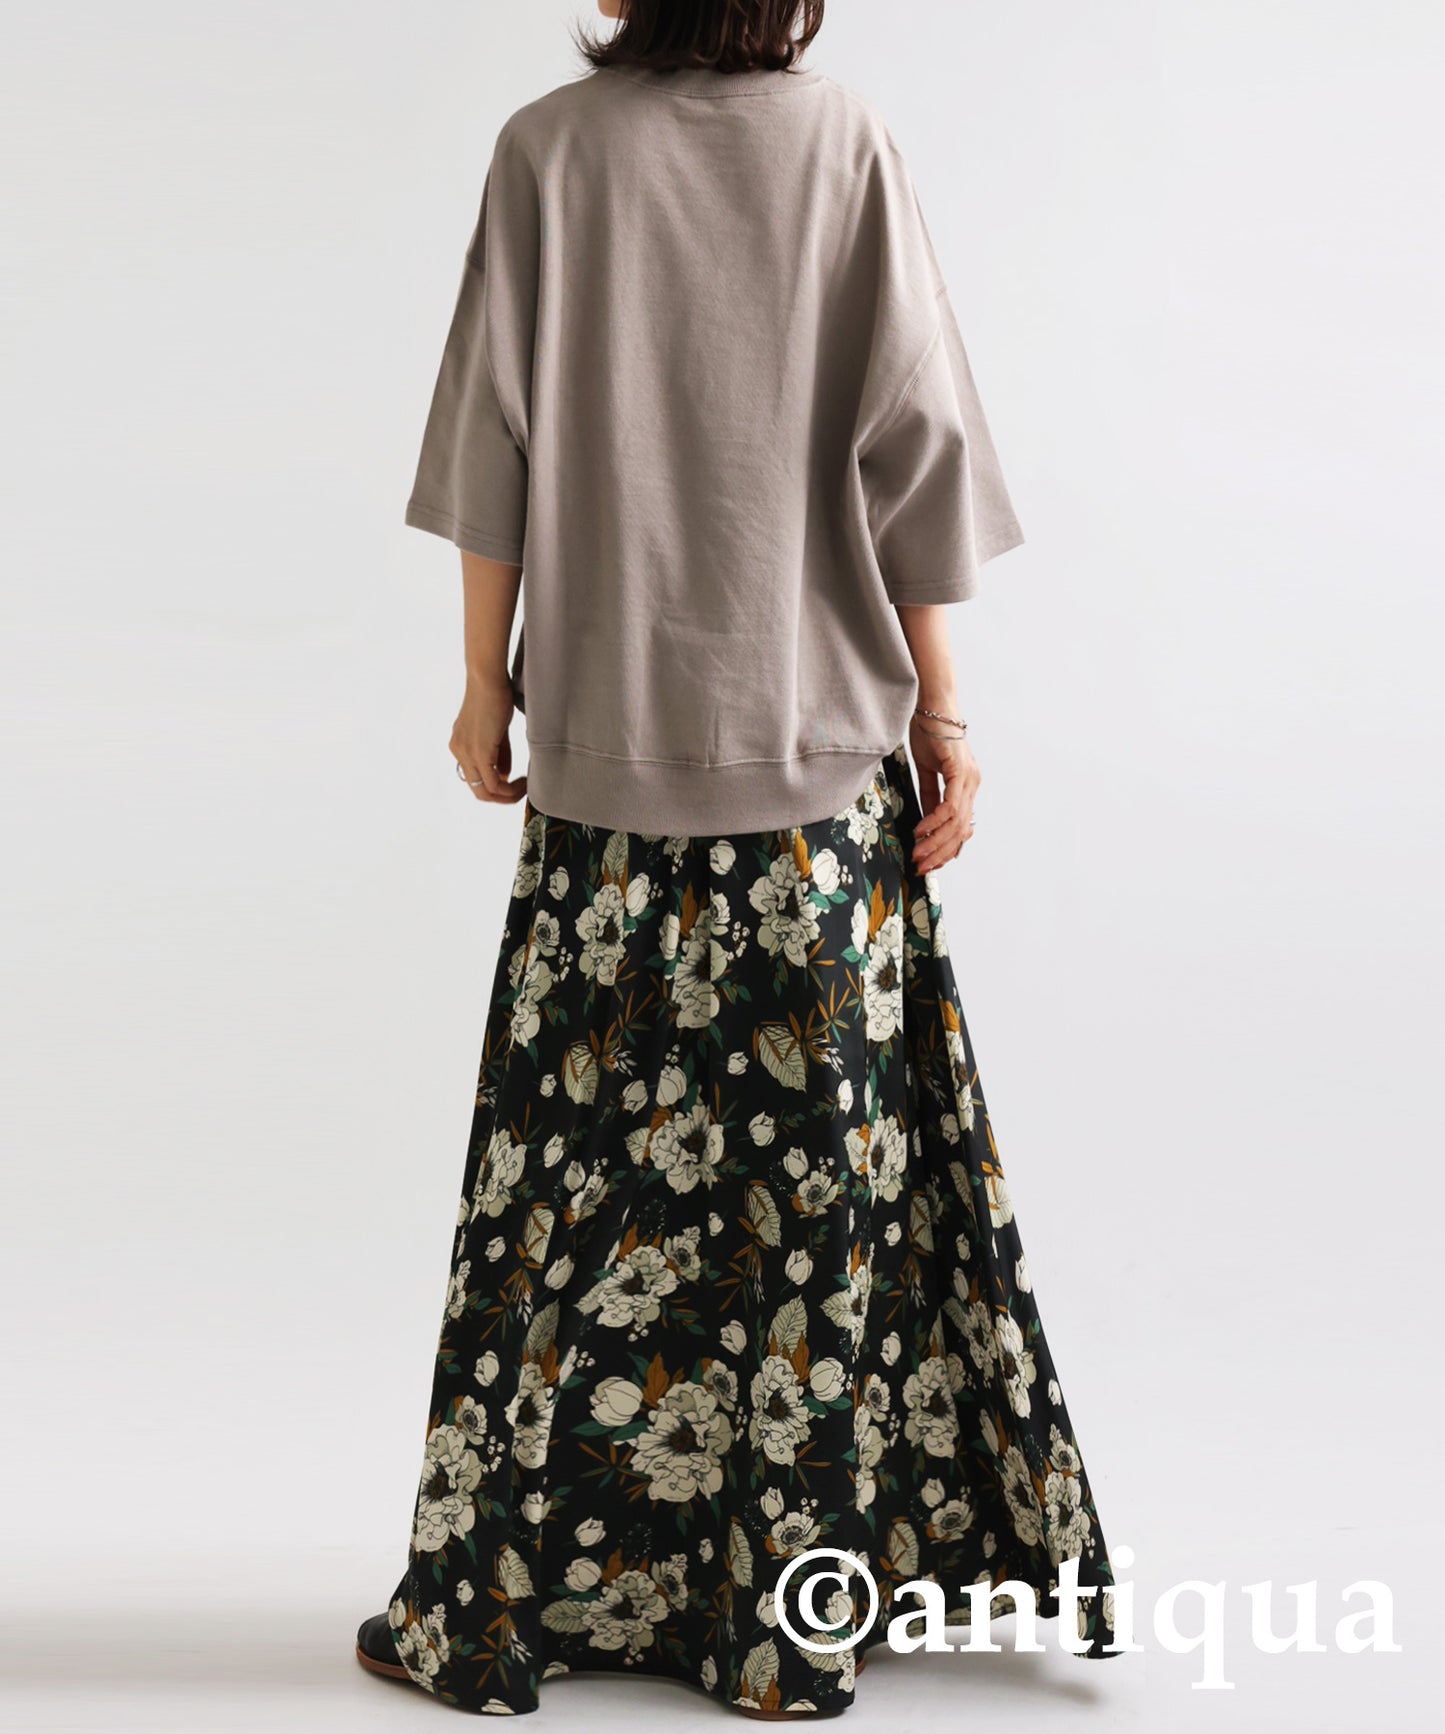 Floral pattern Ladies Long skirt